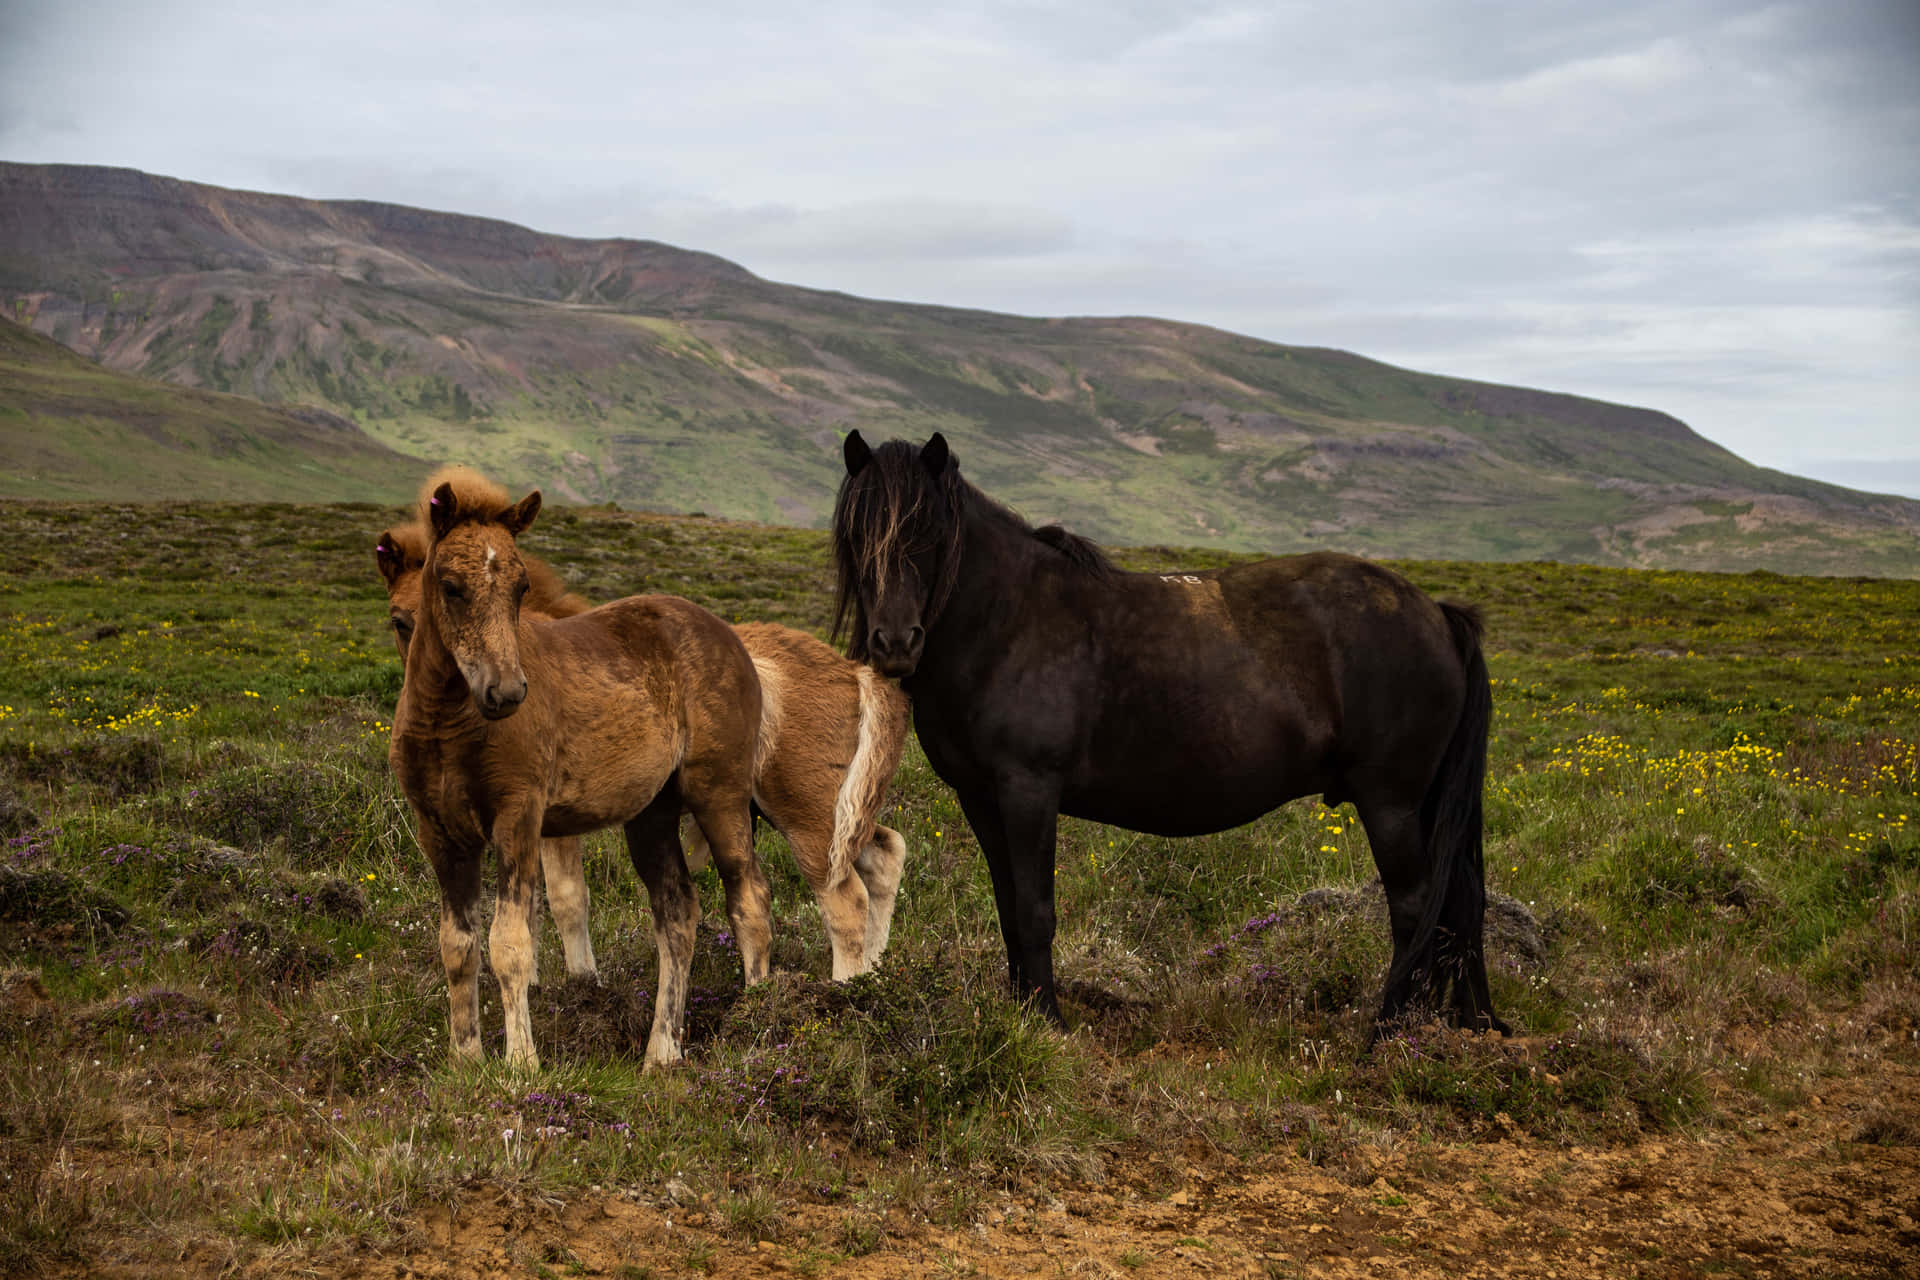 Two majestic horses roam the open terrain